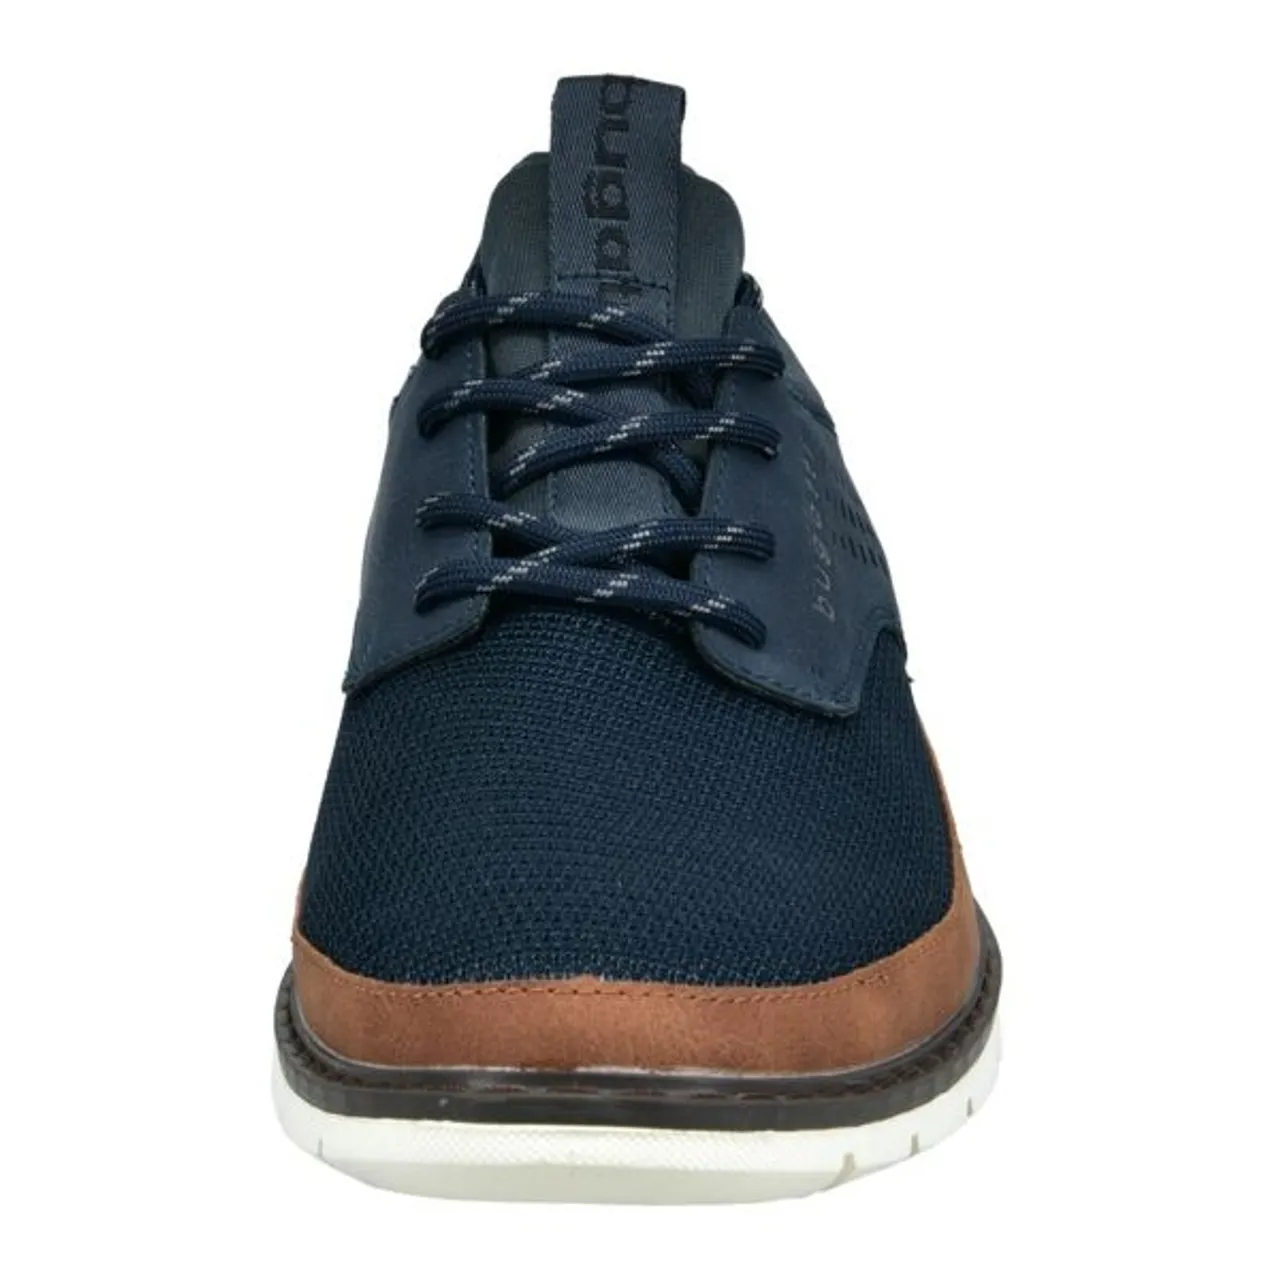 Sneaker BUGATTI Gr. 40, bunt (dunkelblau, braun) Herren Schuhe Stoffschuhe Bestseller